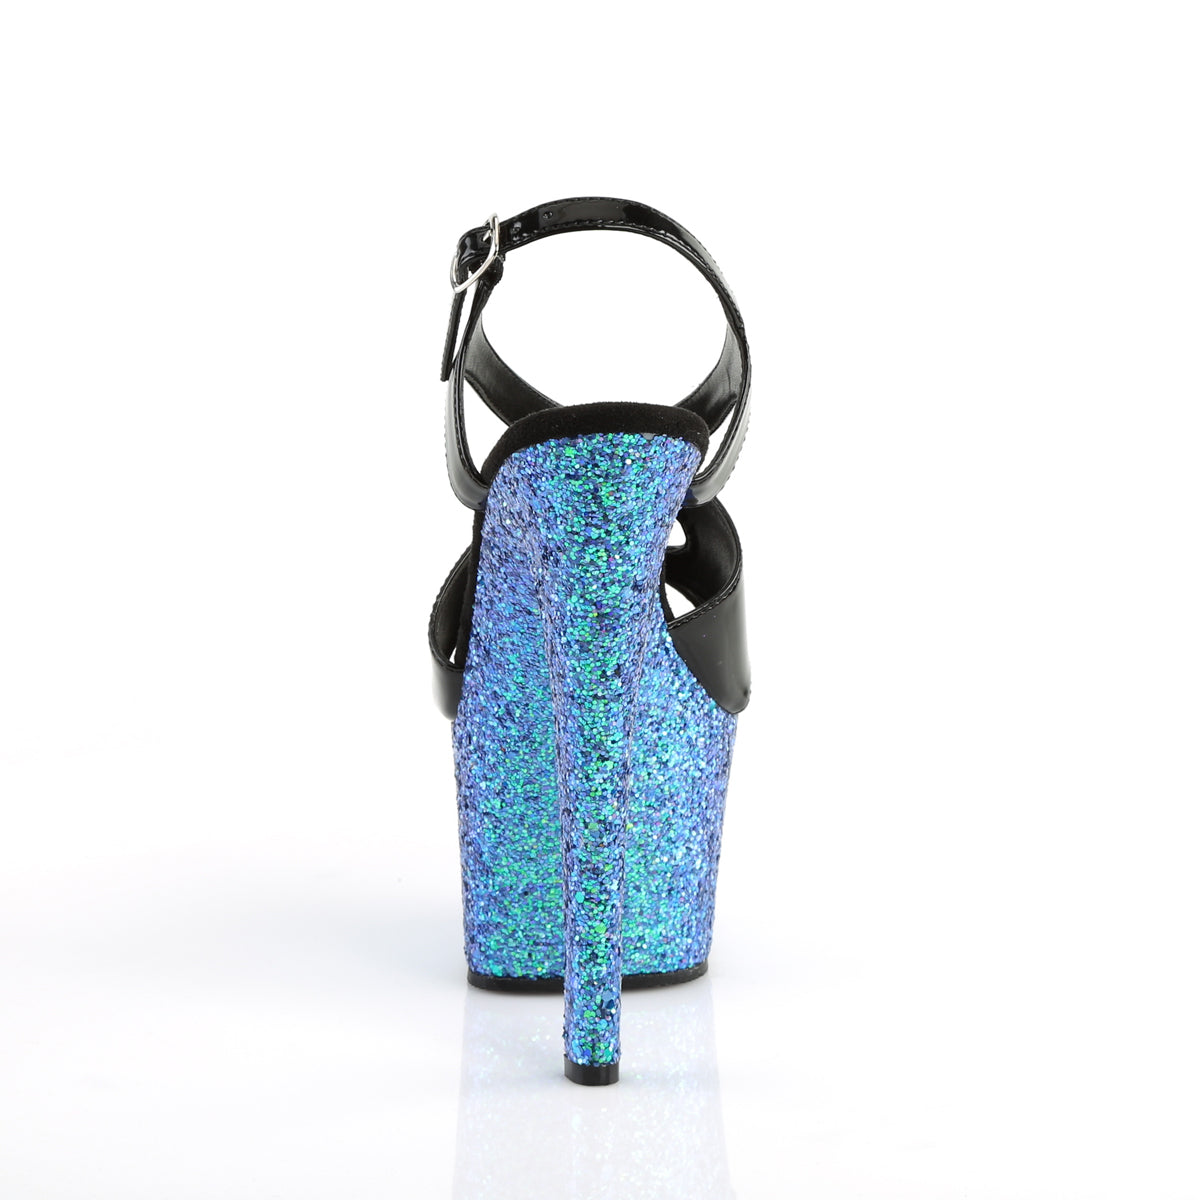 Pleaser Sandales pour femmes SKY-330LG BLK PAT / Bleu Multi Glitter